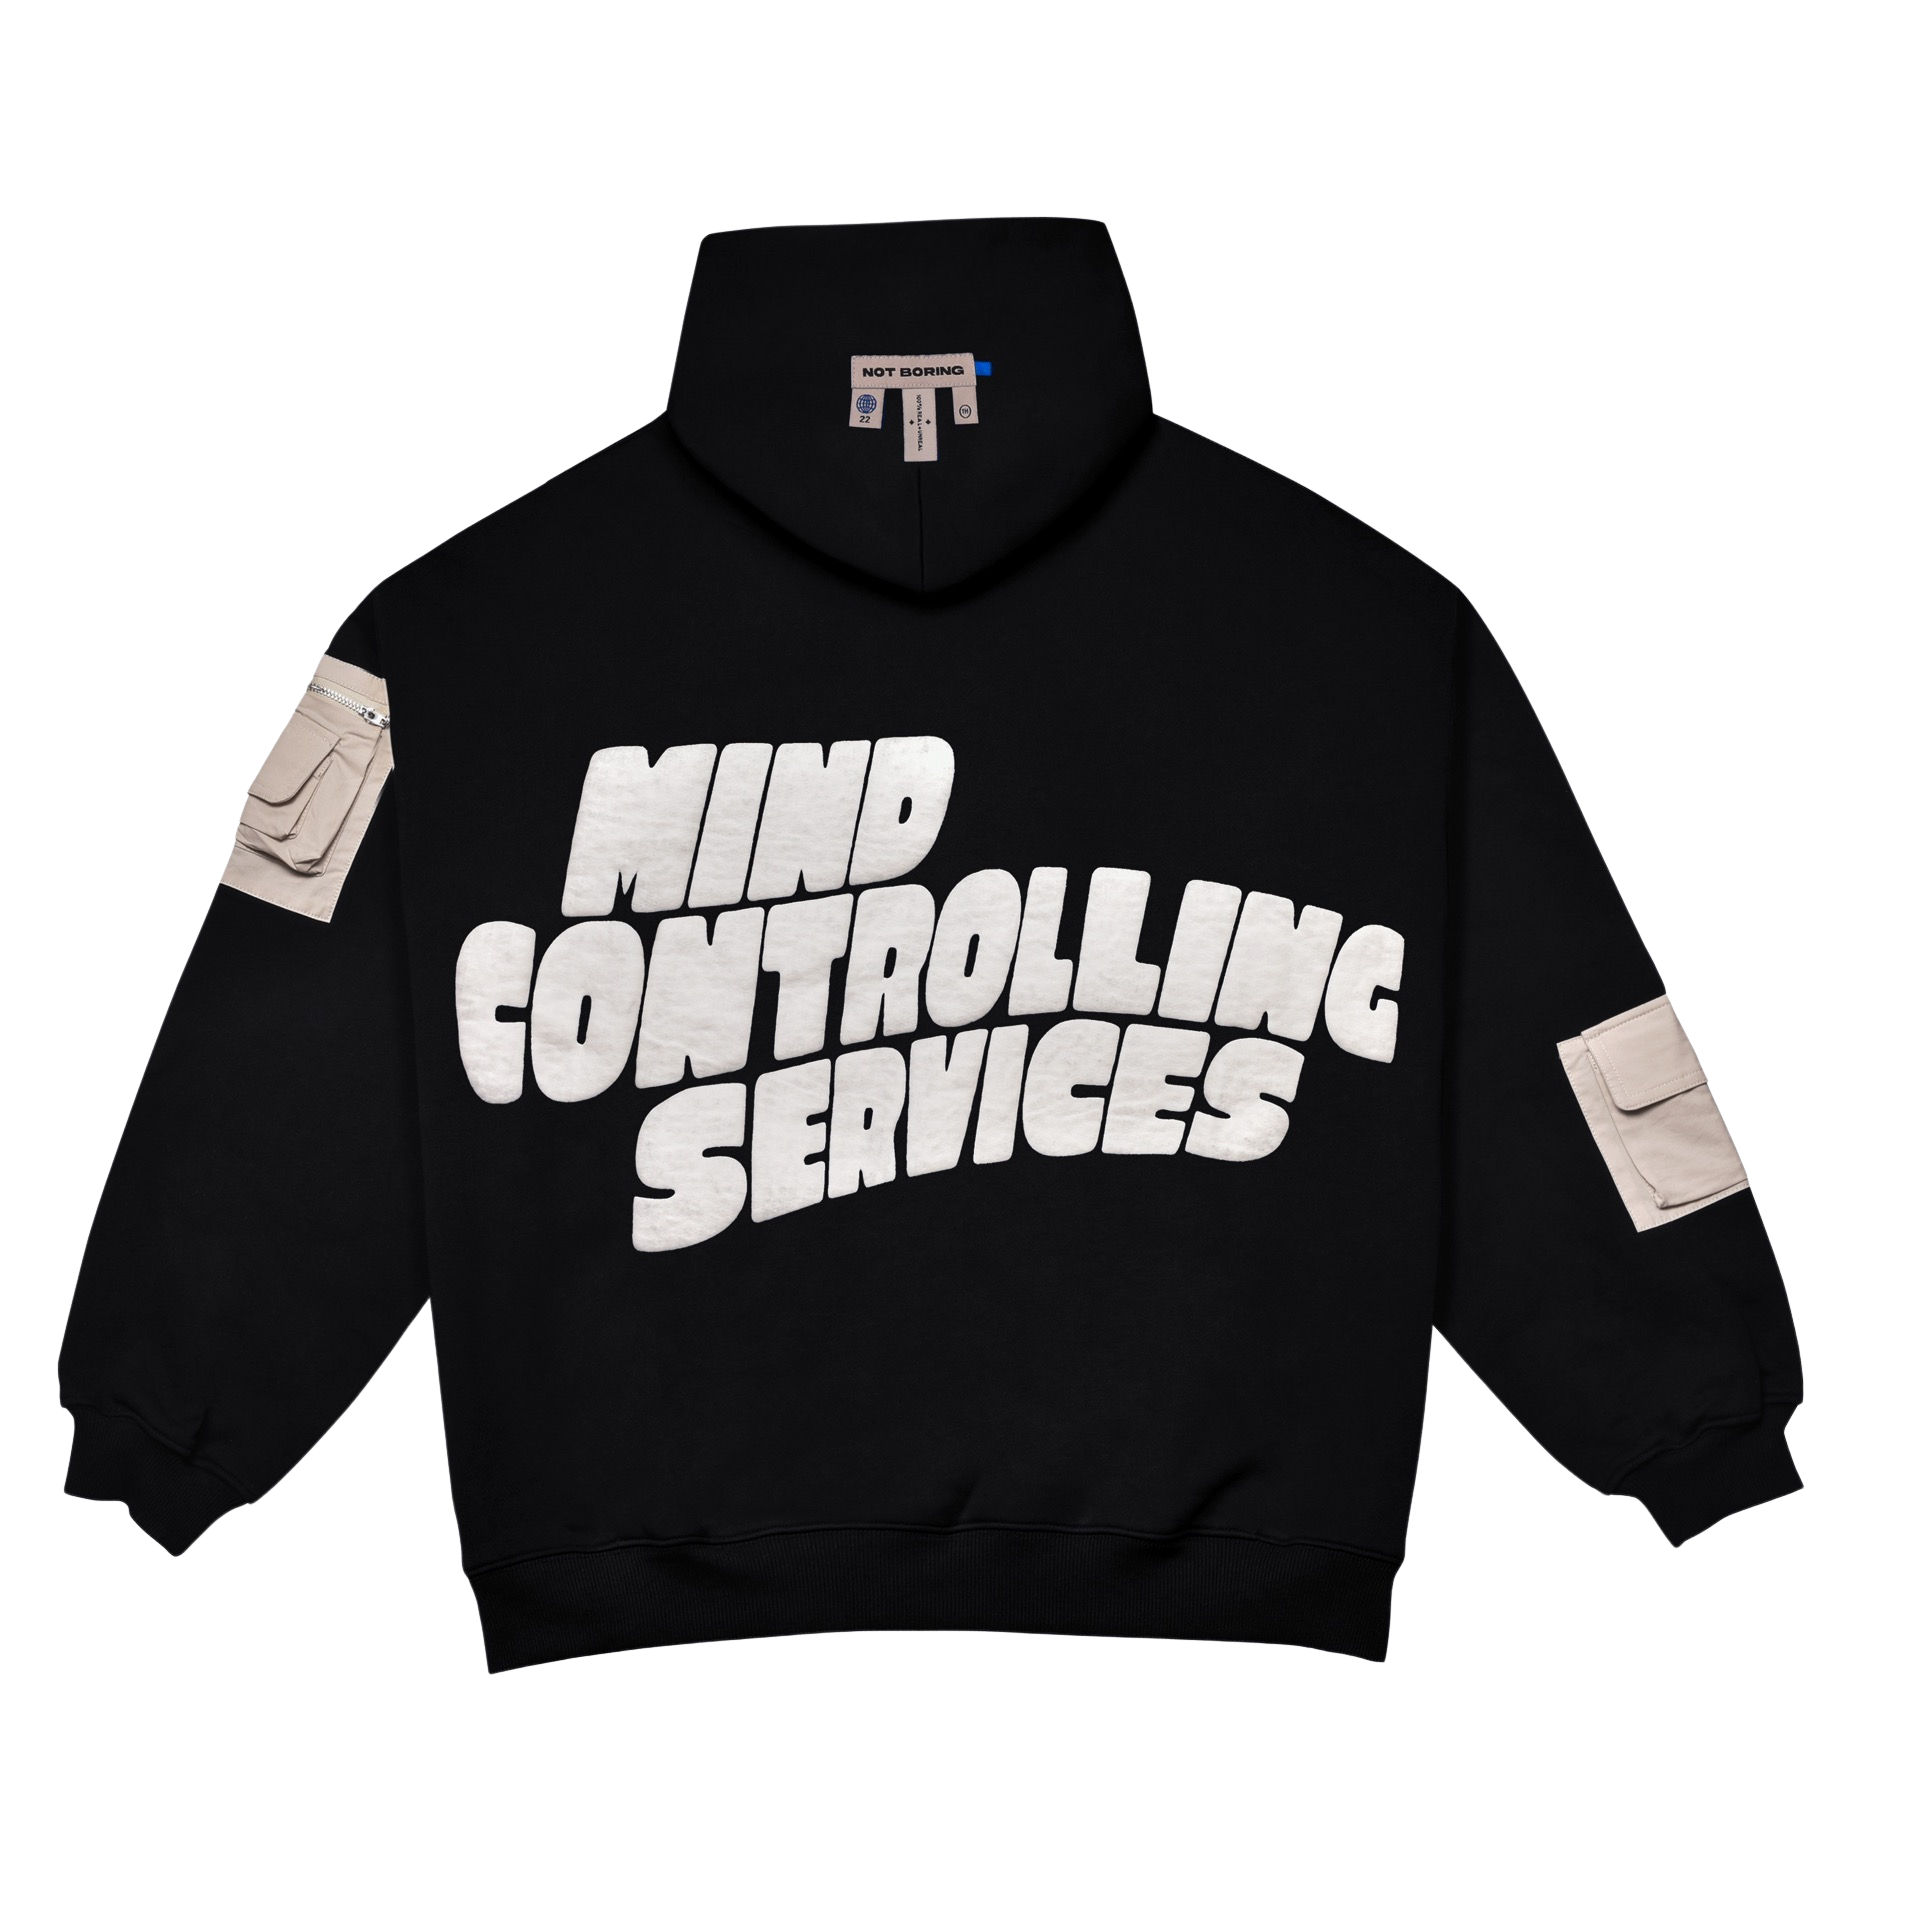 Brain Controlling Services Vest Hoodie